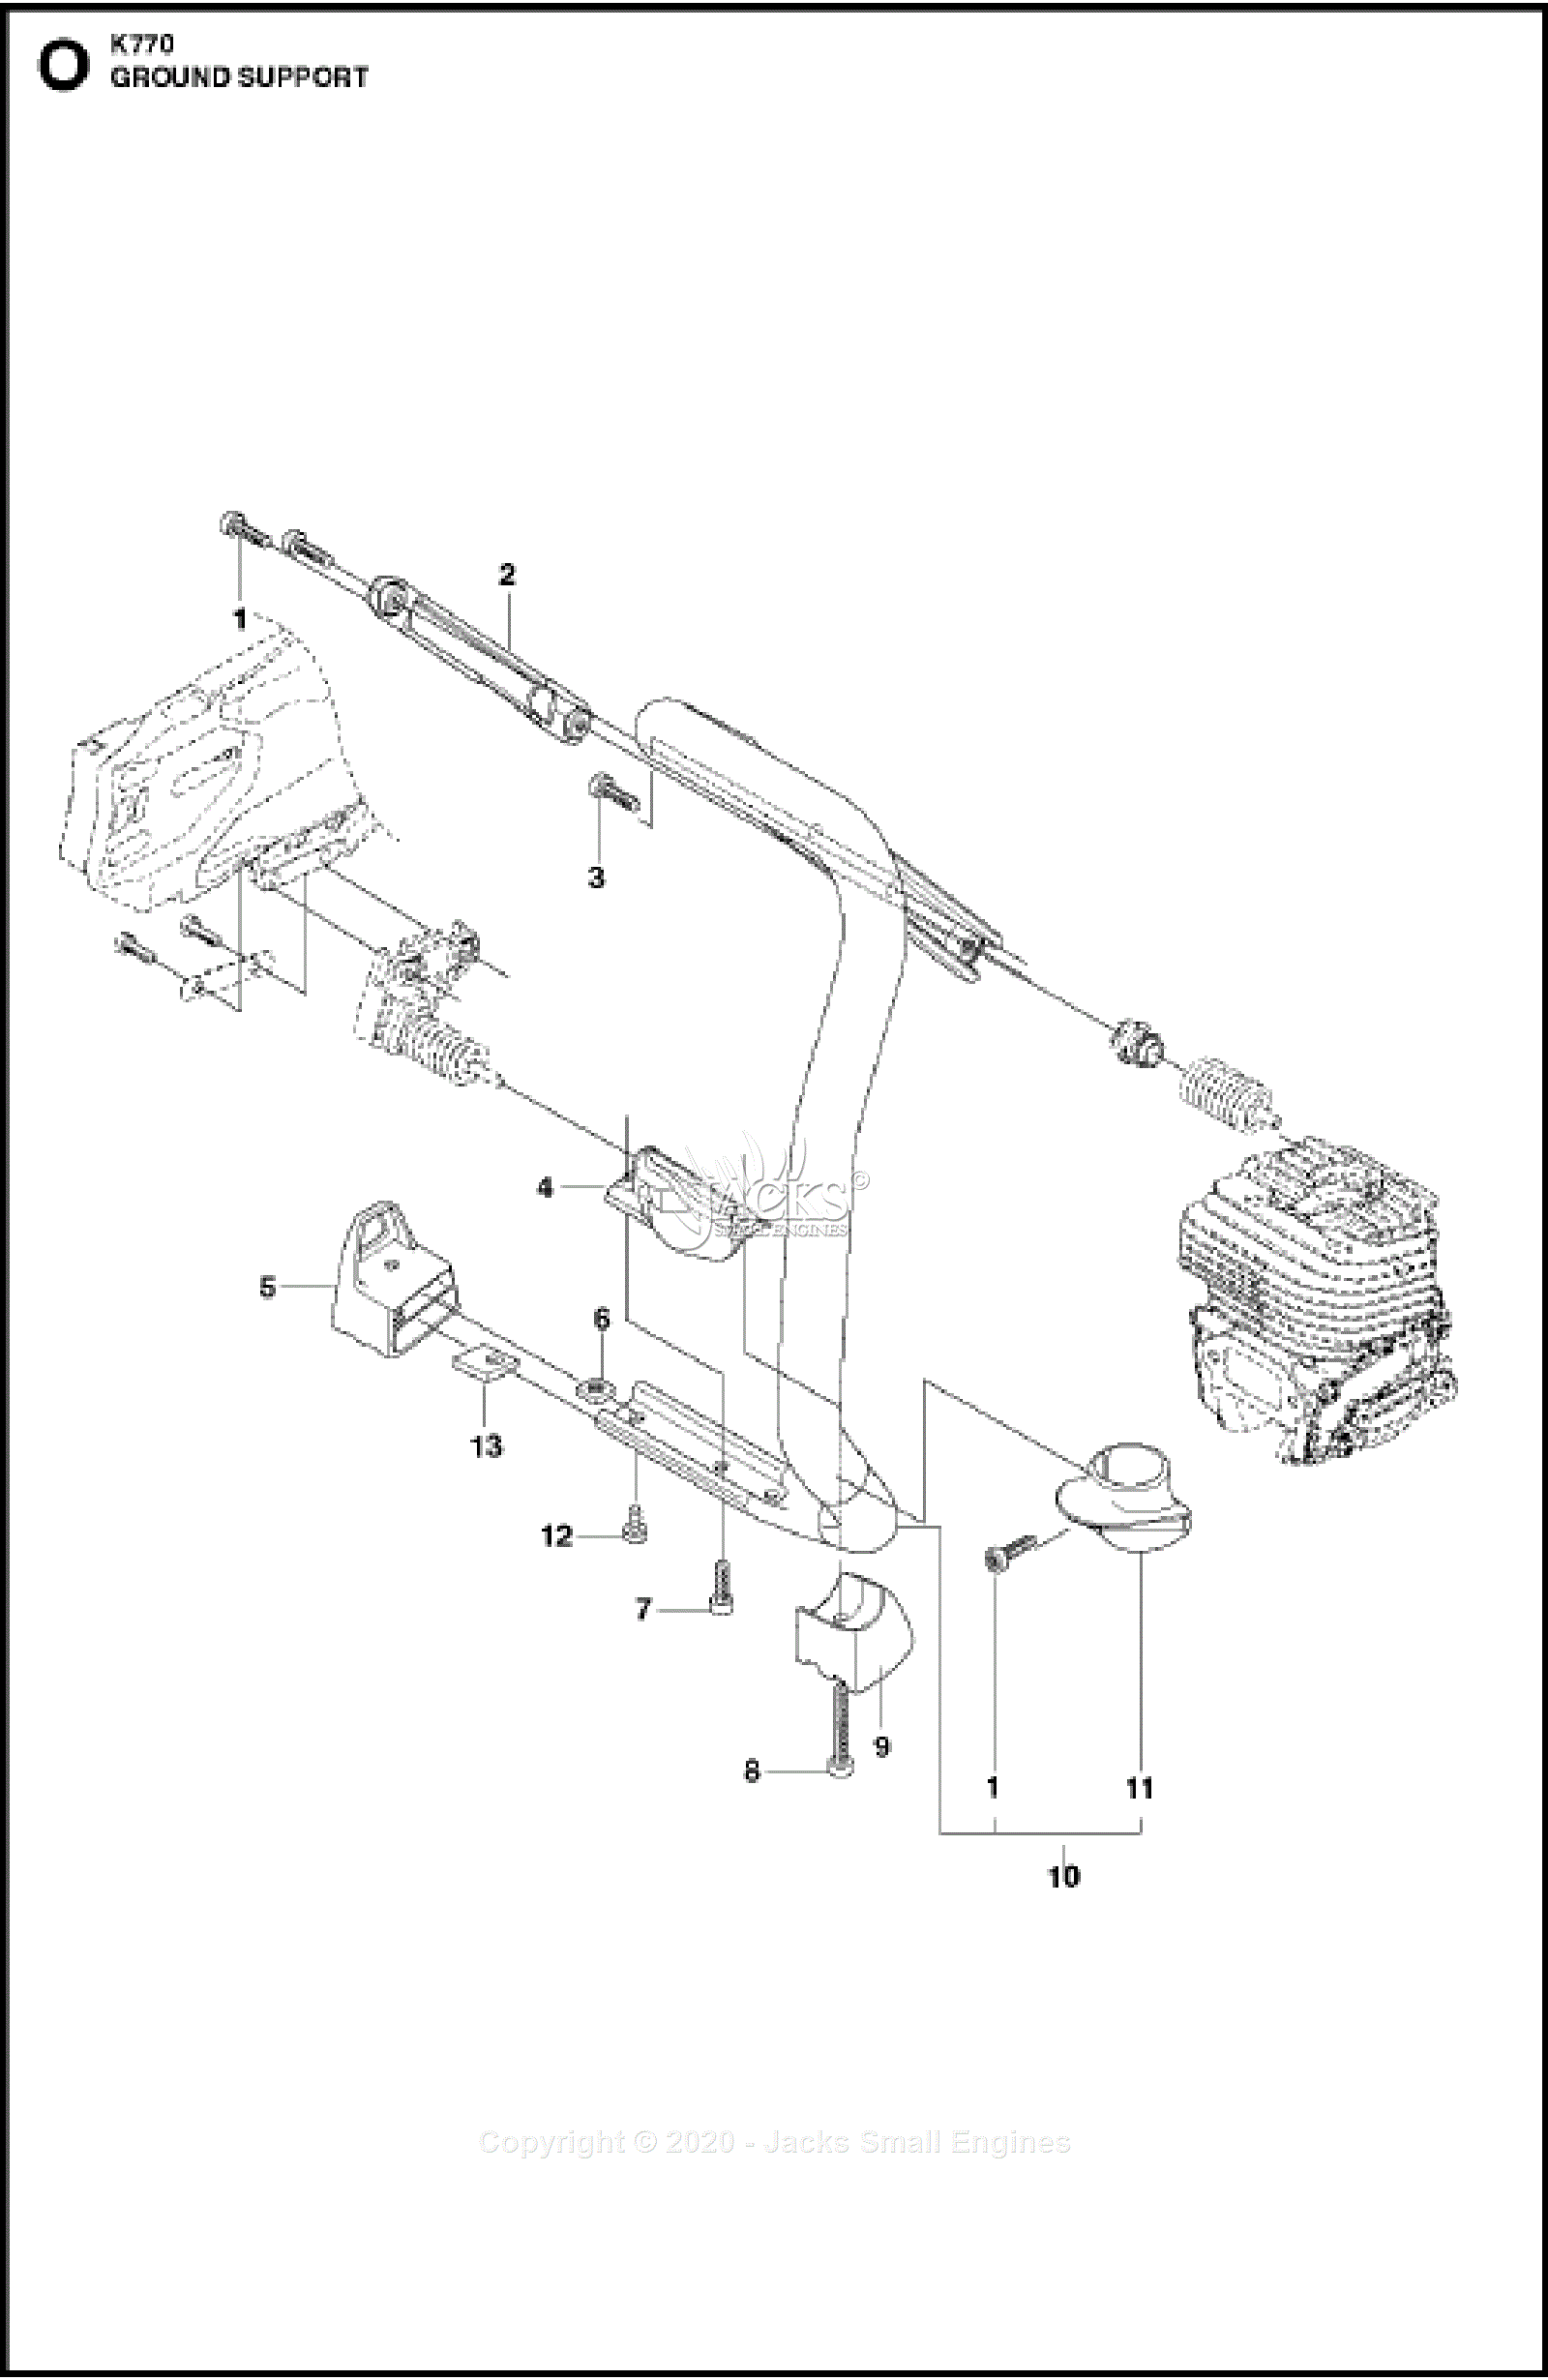 Husqvarna K 770 SmartGuard (2020-04) Parts Diagram for Ground Support